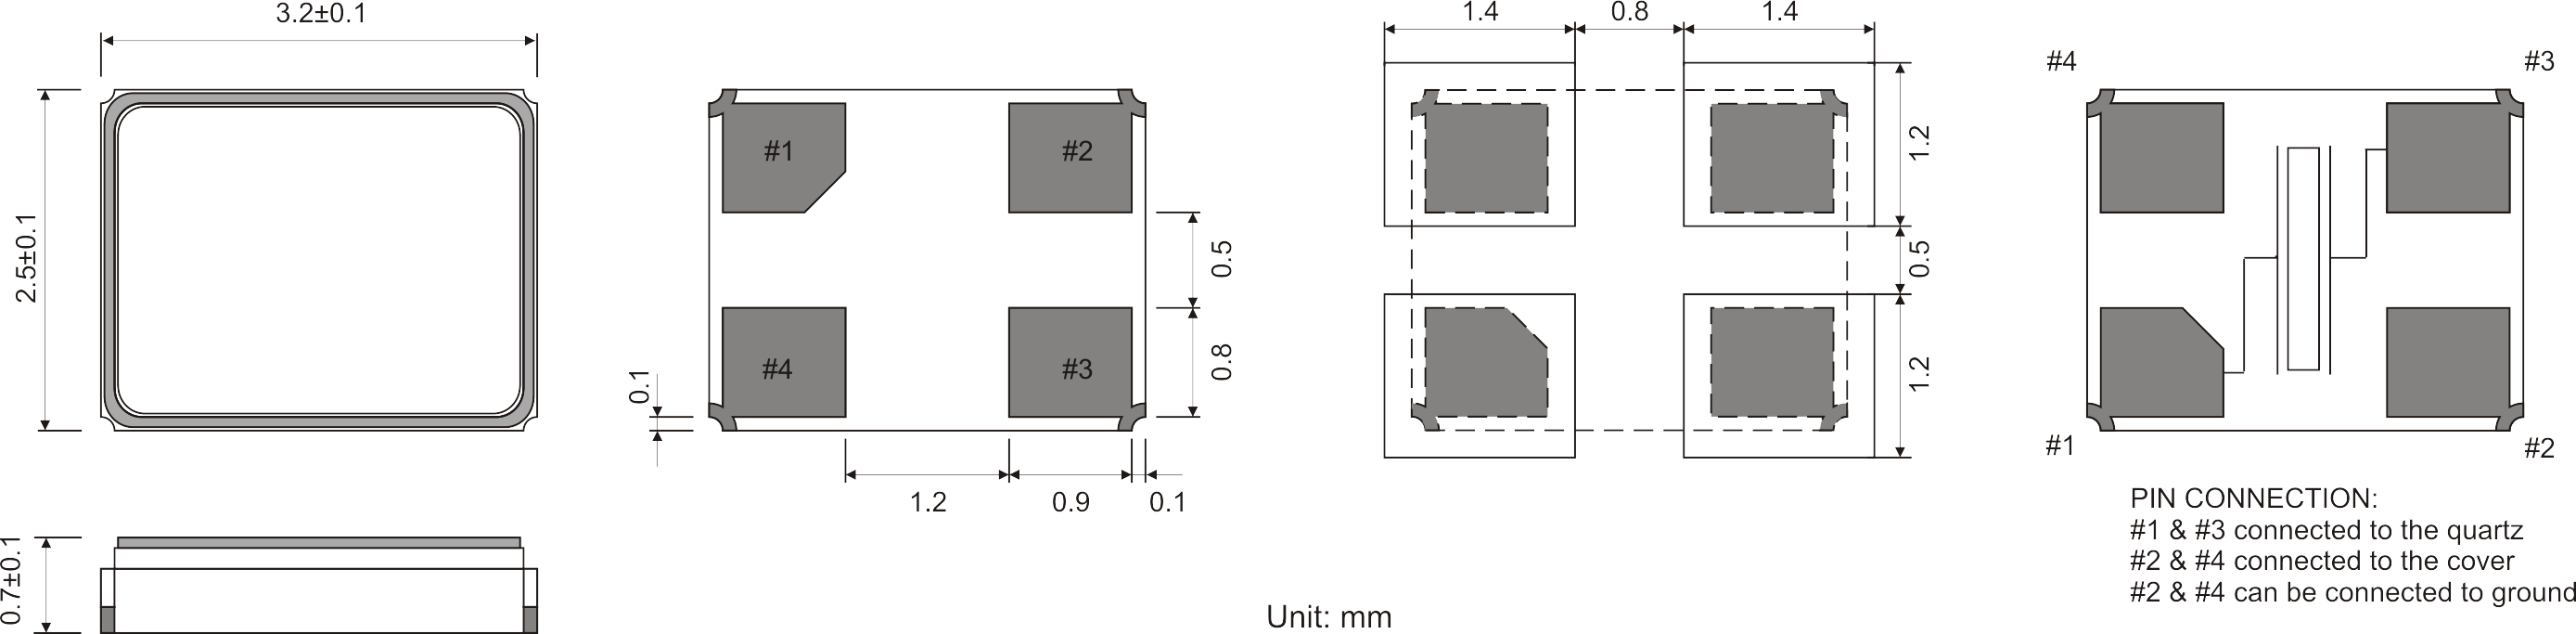 SMD QUARTZ CRYSTAL 3.2 x 2.5 mm 8.0 - 285.0MHz 